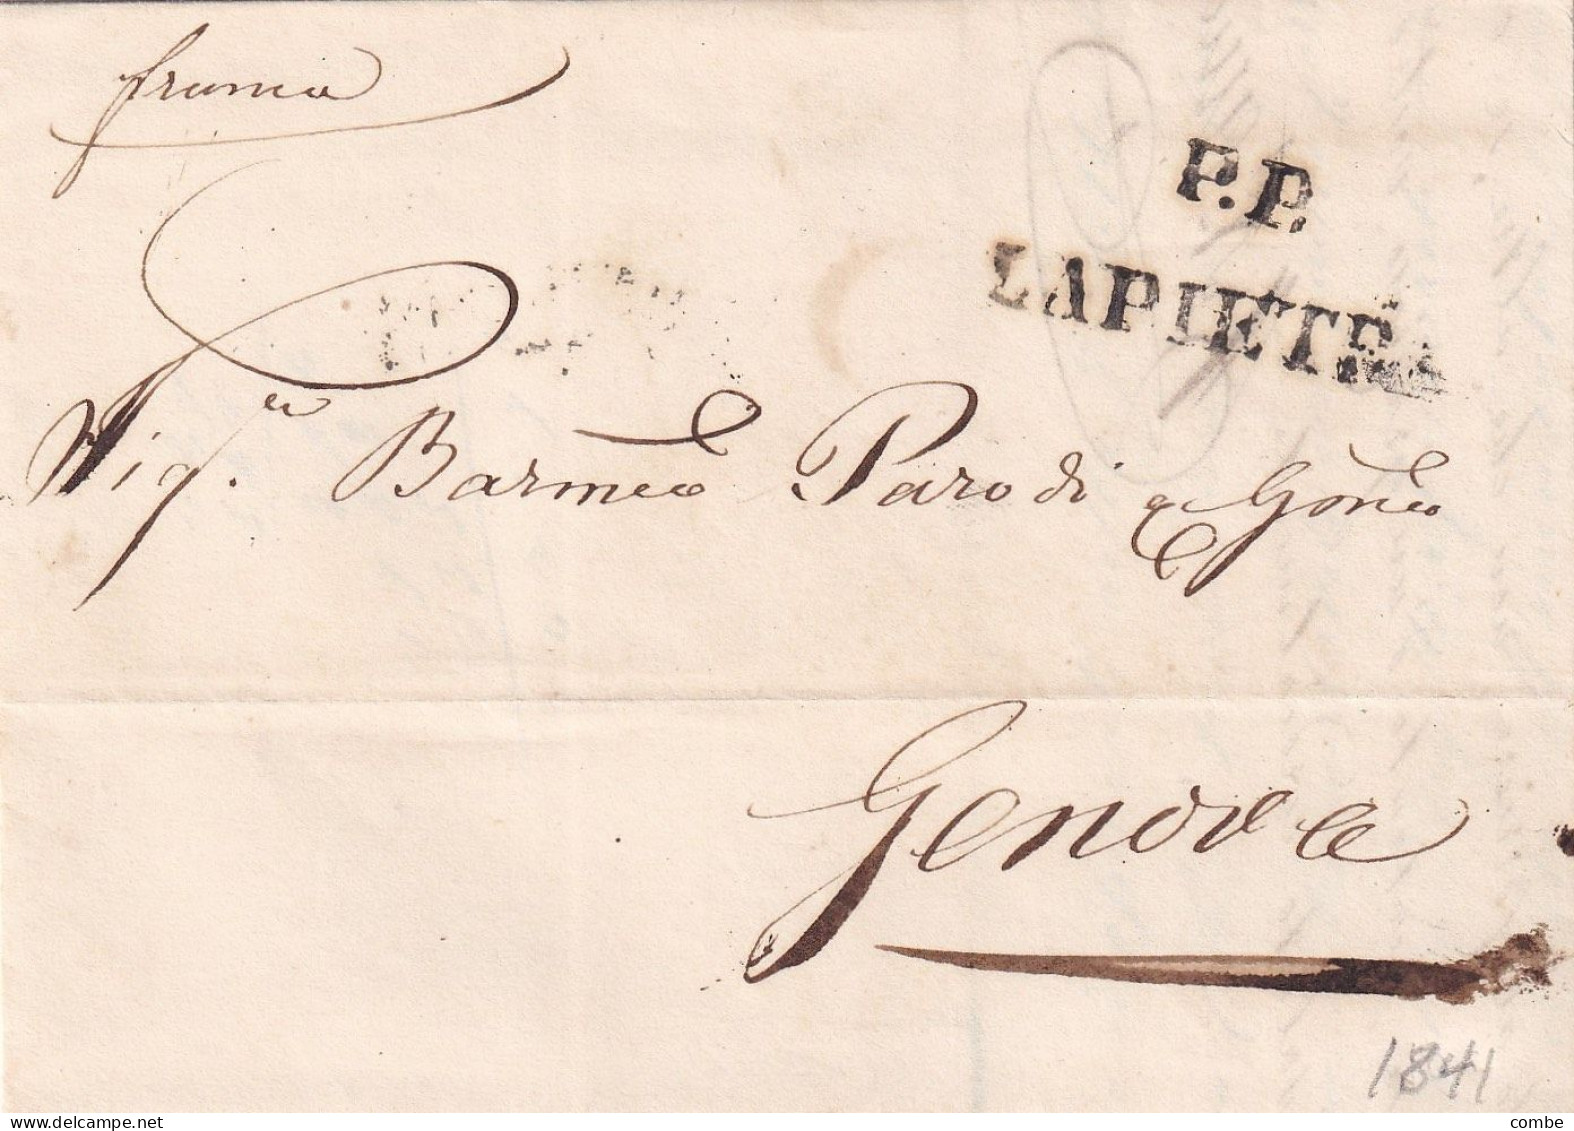 PREFILATECA COMPLETE DI TESTO. P.P. LA PIETRA. LIGURA. A GENOVA. IN DATA. 29 11 1841 - ...-1850 Préphilatélie